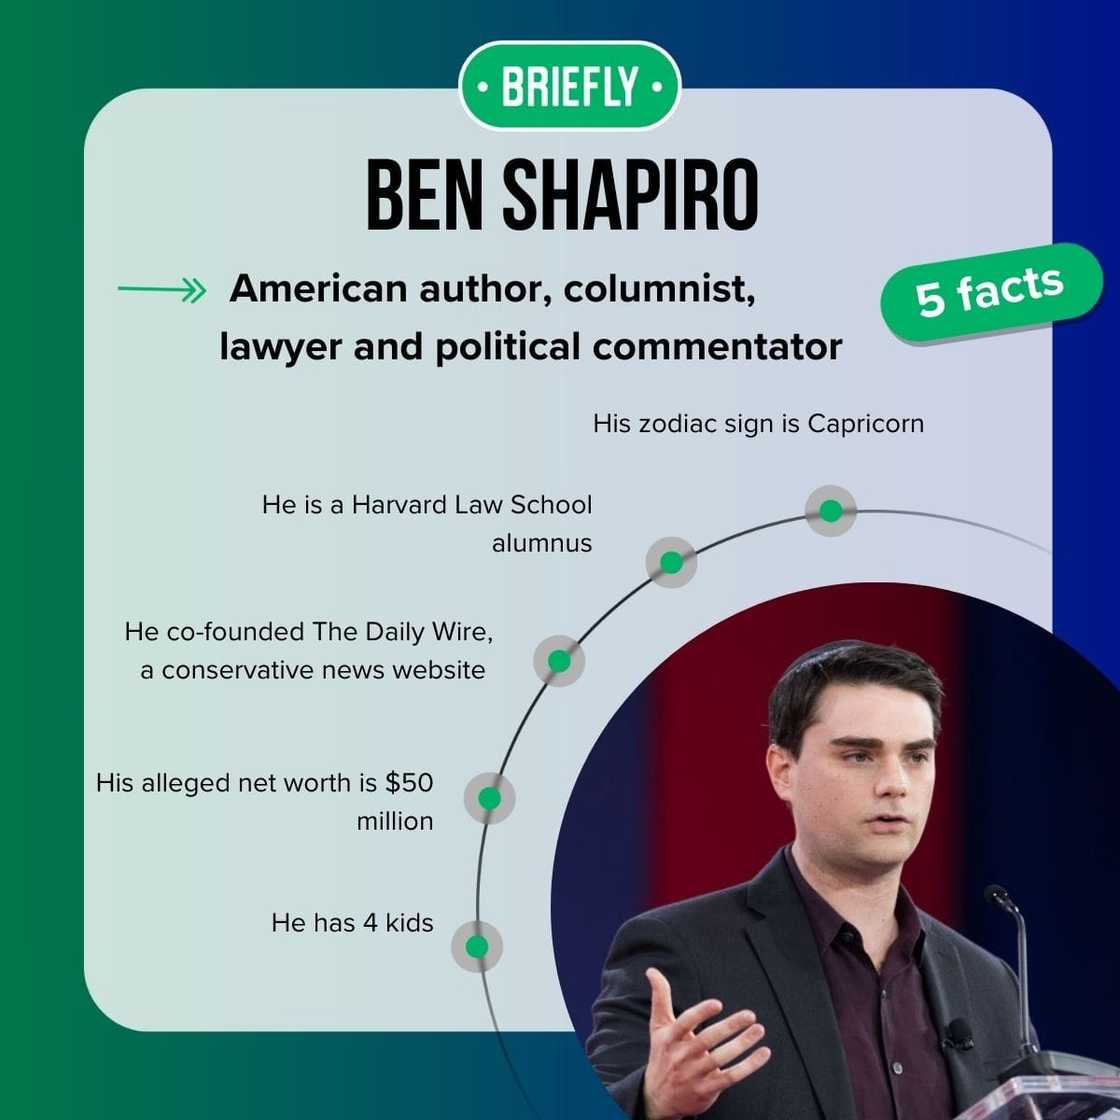 Ben Shapiro's facts